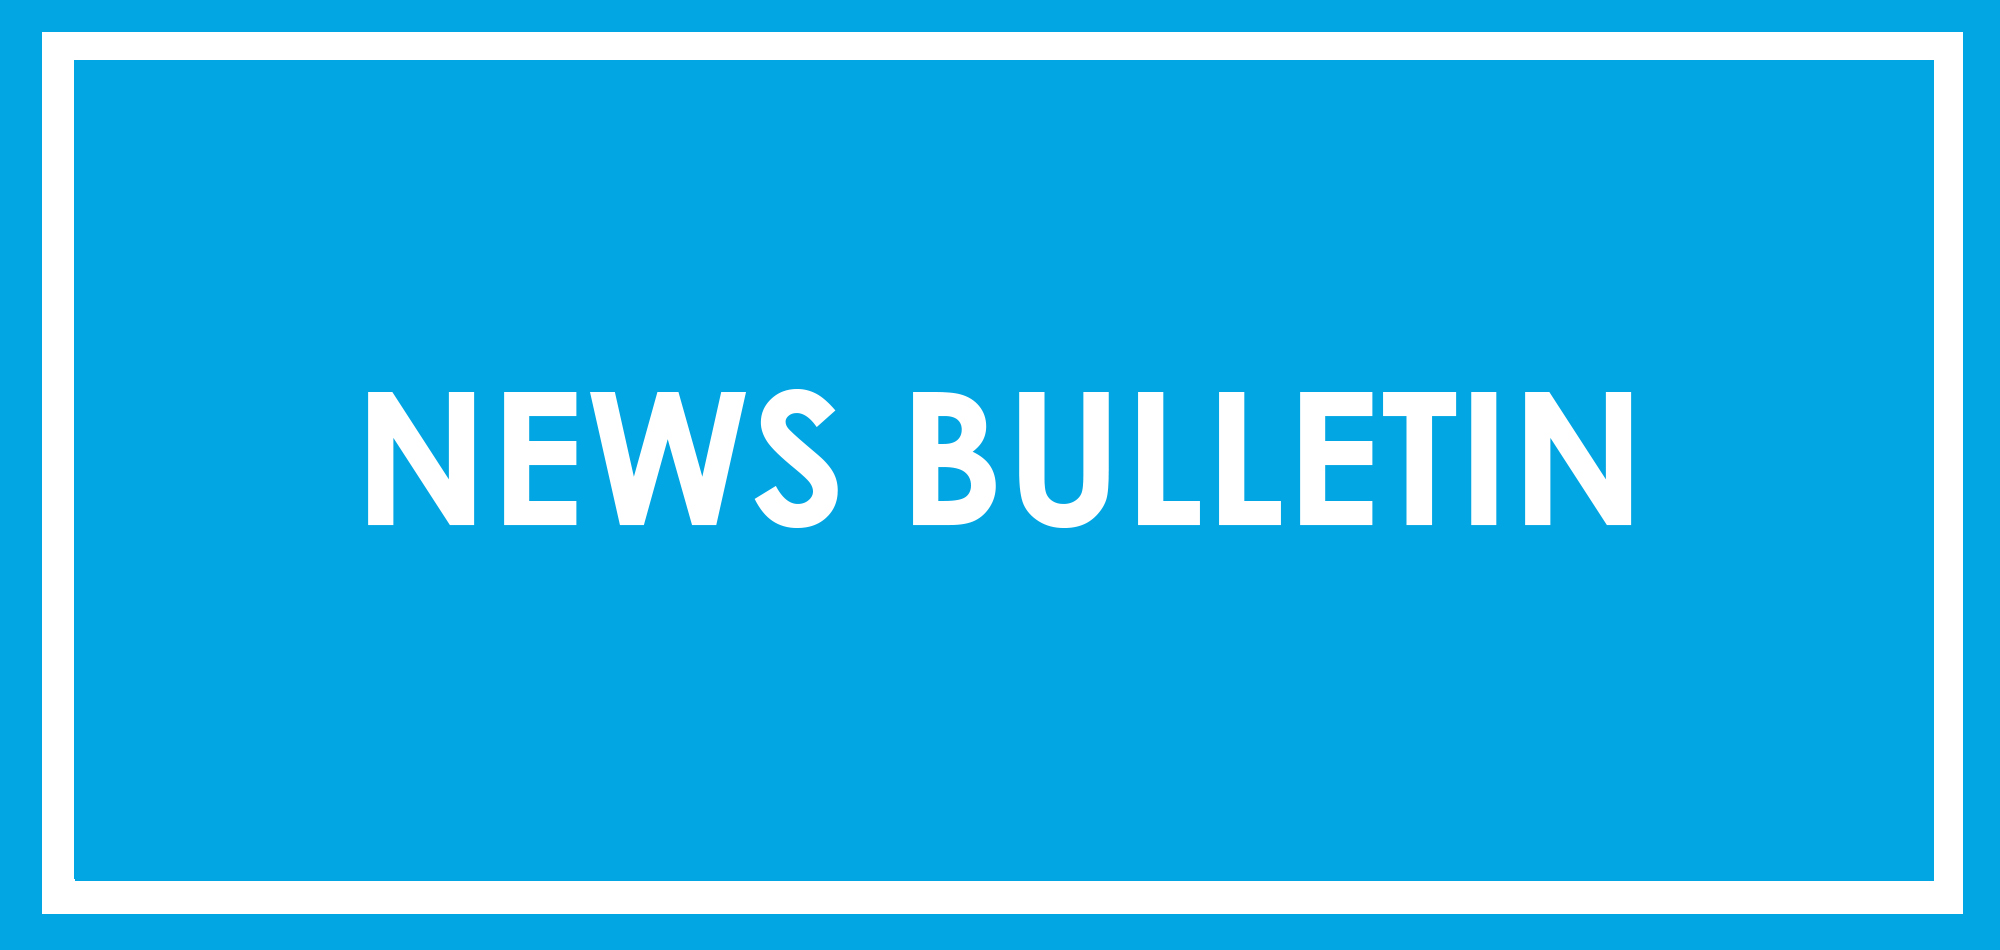 News Bulletin - 06.09.20